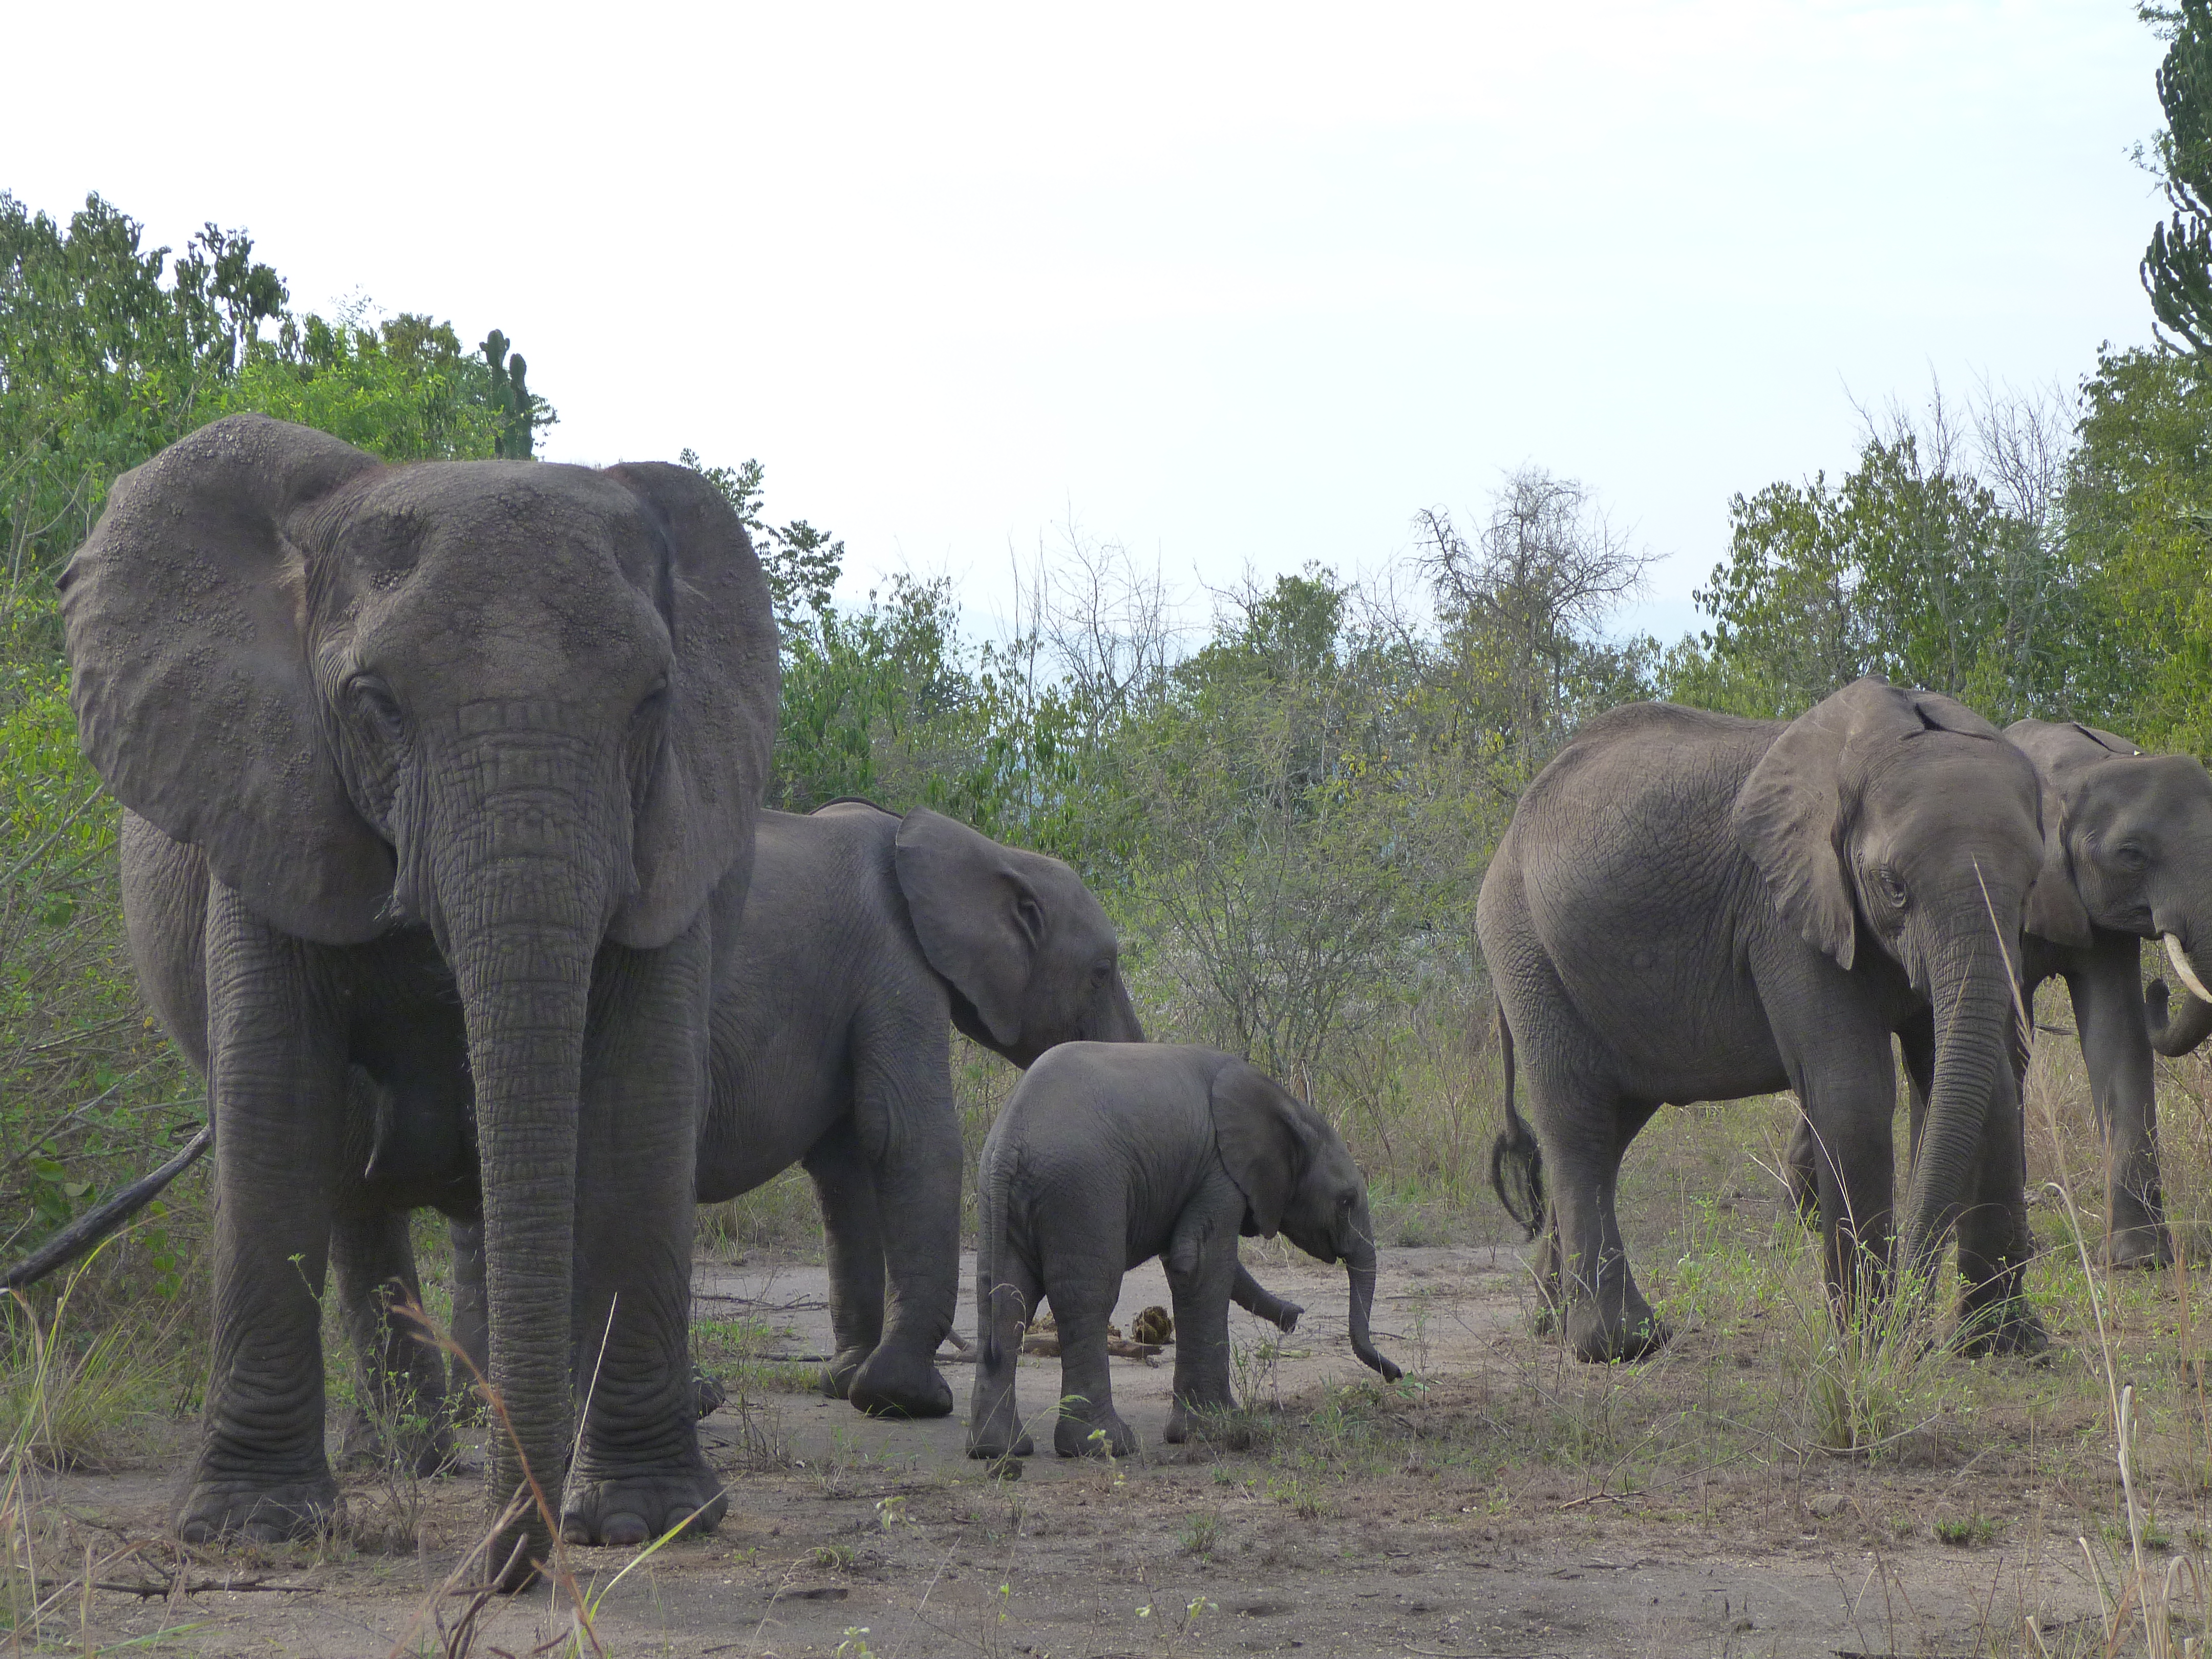 Image: Elephants in east Africa (September 2014), credit: Dr Colin Beale